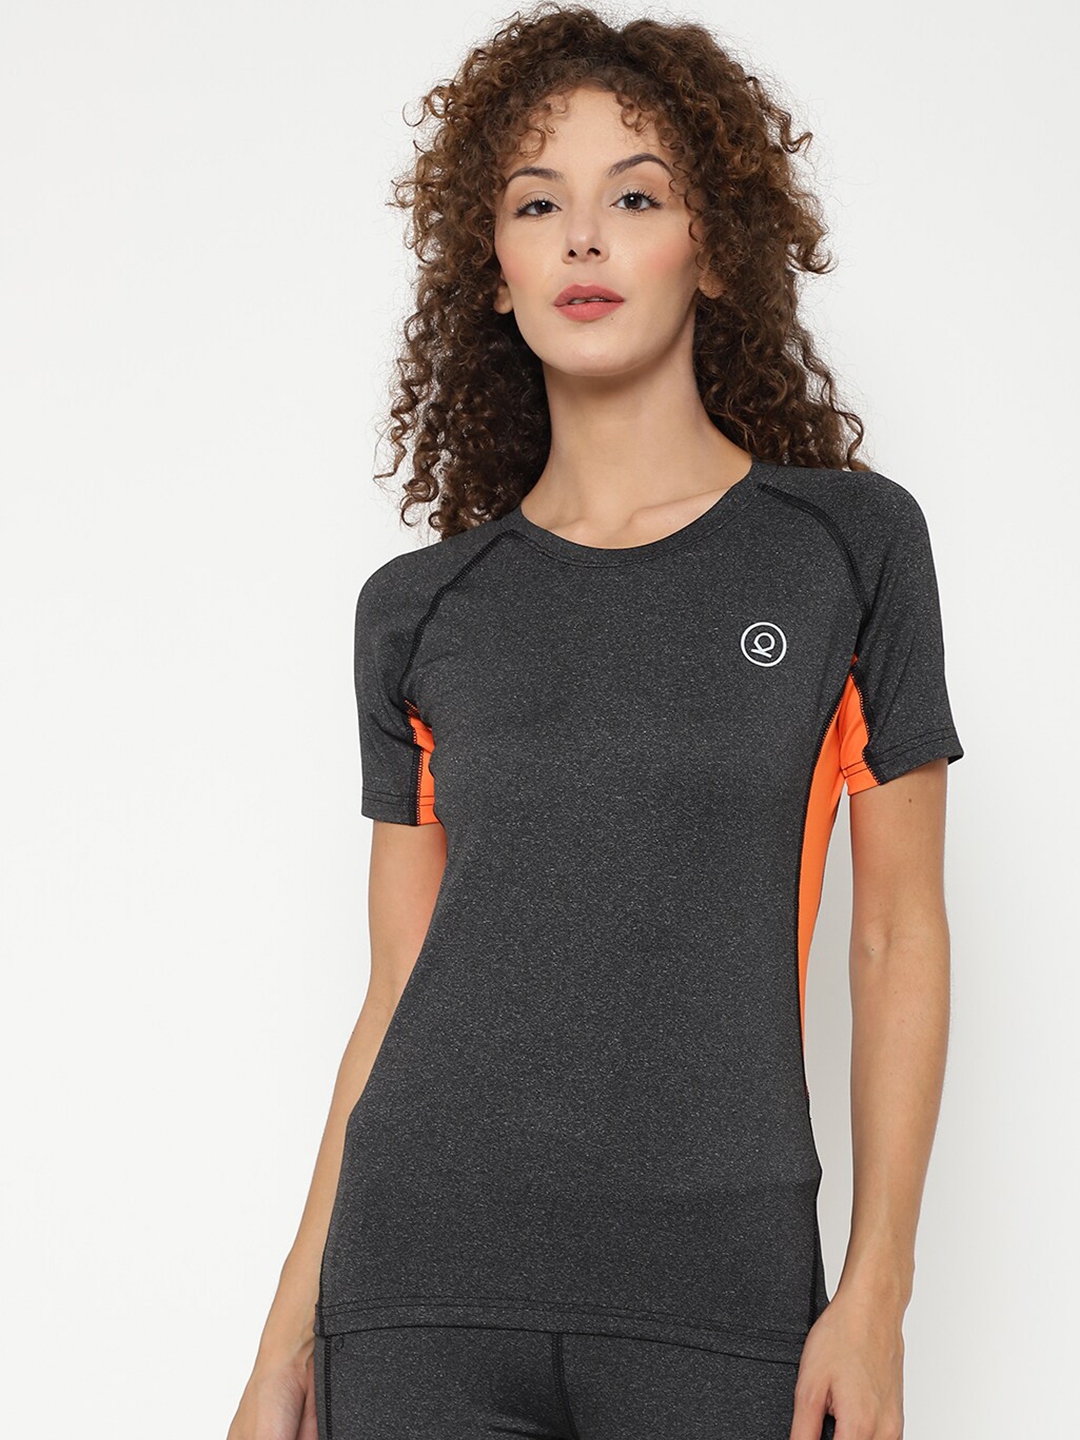 Buy CHKOKKO Round Neck Raglan Sleeves Neon Highlights Dry Fit Gym Sports T  Shirt - Tshirts for Women 21768568